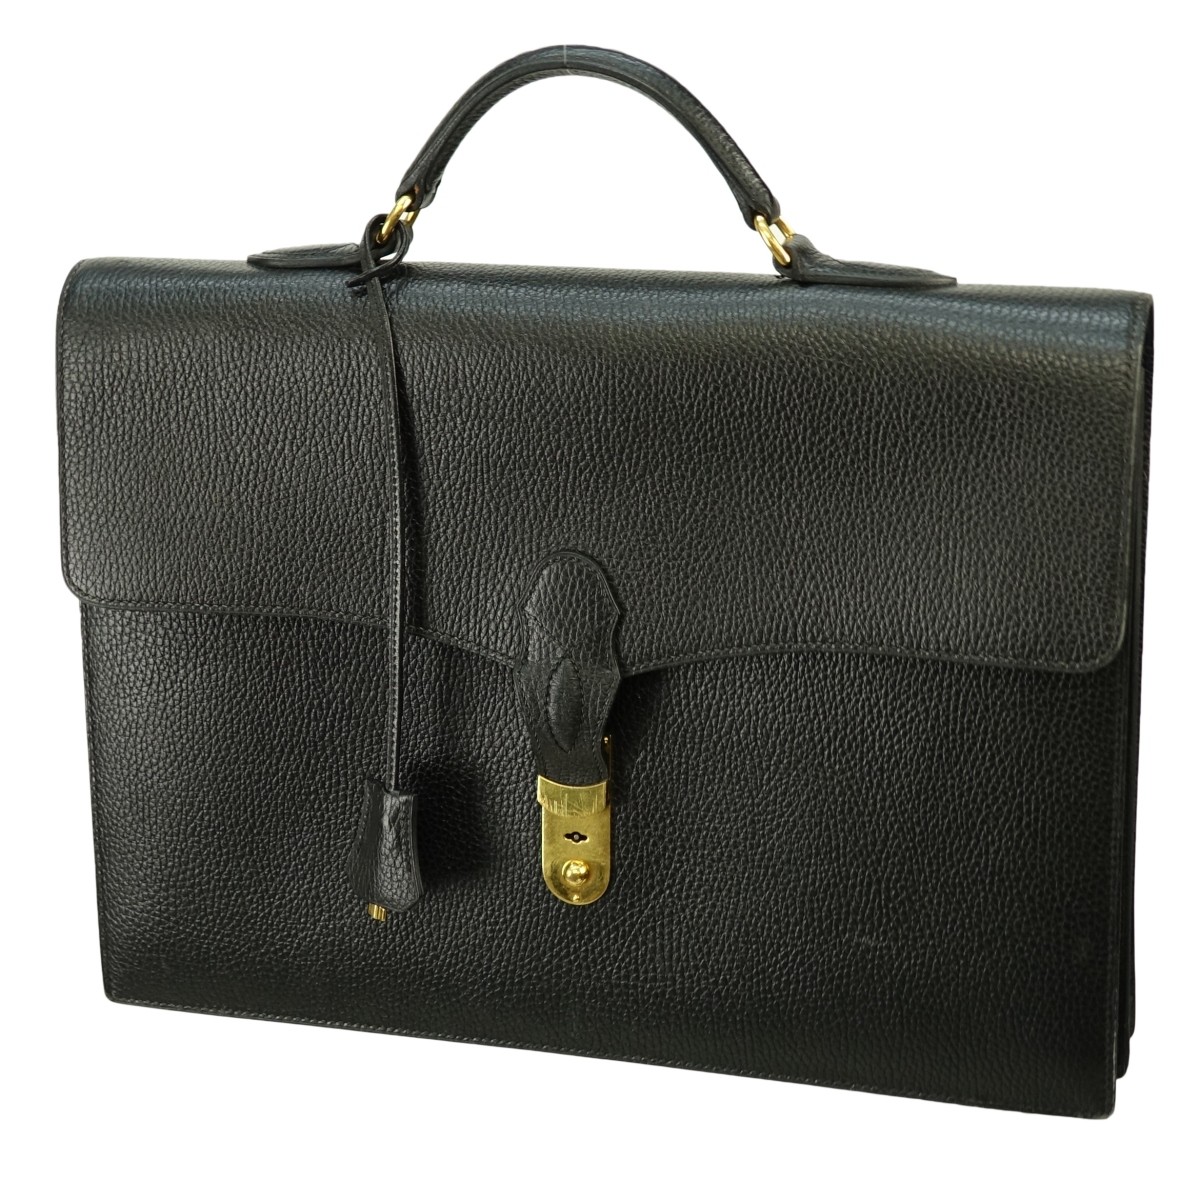 Hermes Briefcase